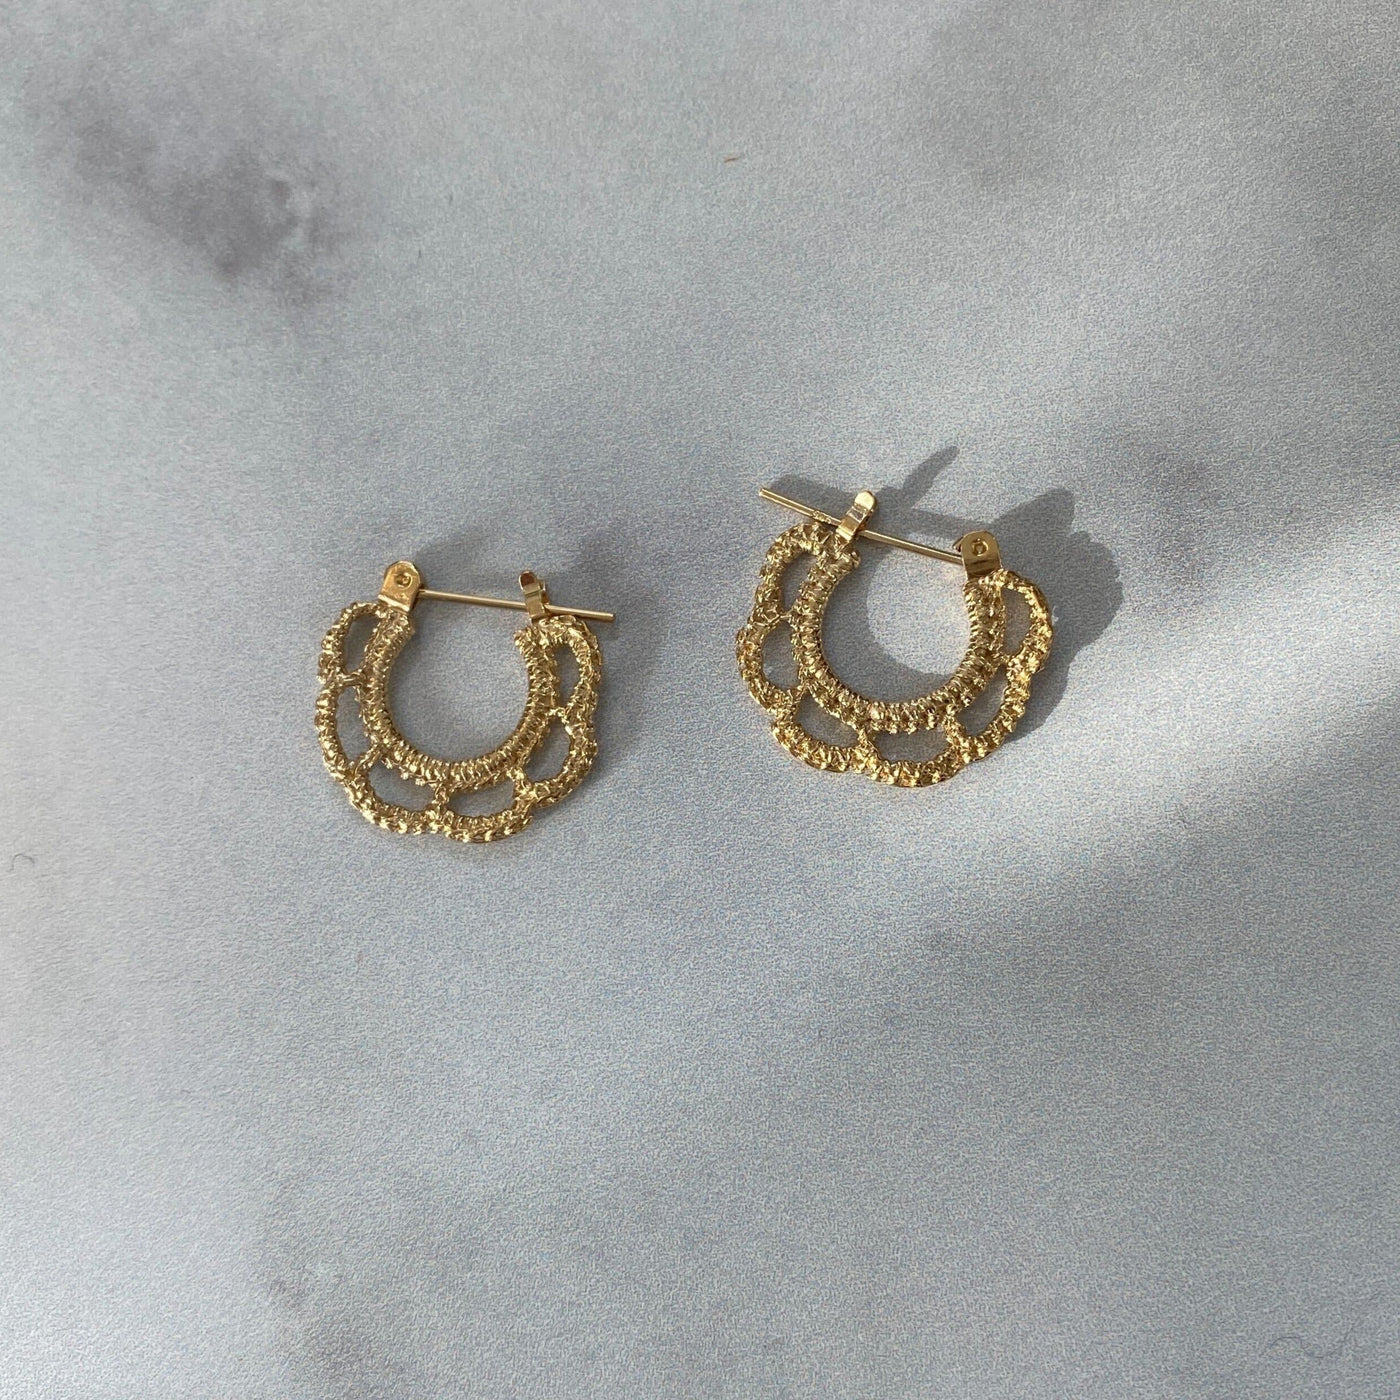 Cast Lace Scalloped Hoops // Limited Edition-Earrings-Twyla Dill-14kt Gold Vermeil-Seattle Jewelry-Handmade Jewelry-Seattle Jeweler-Twyla Dill